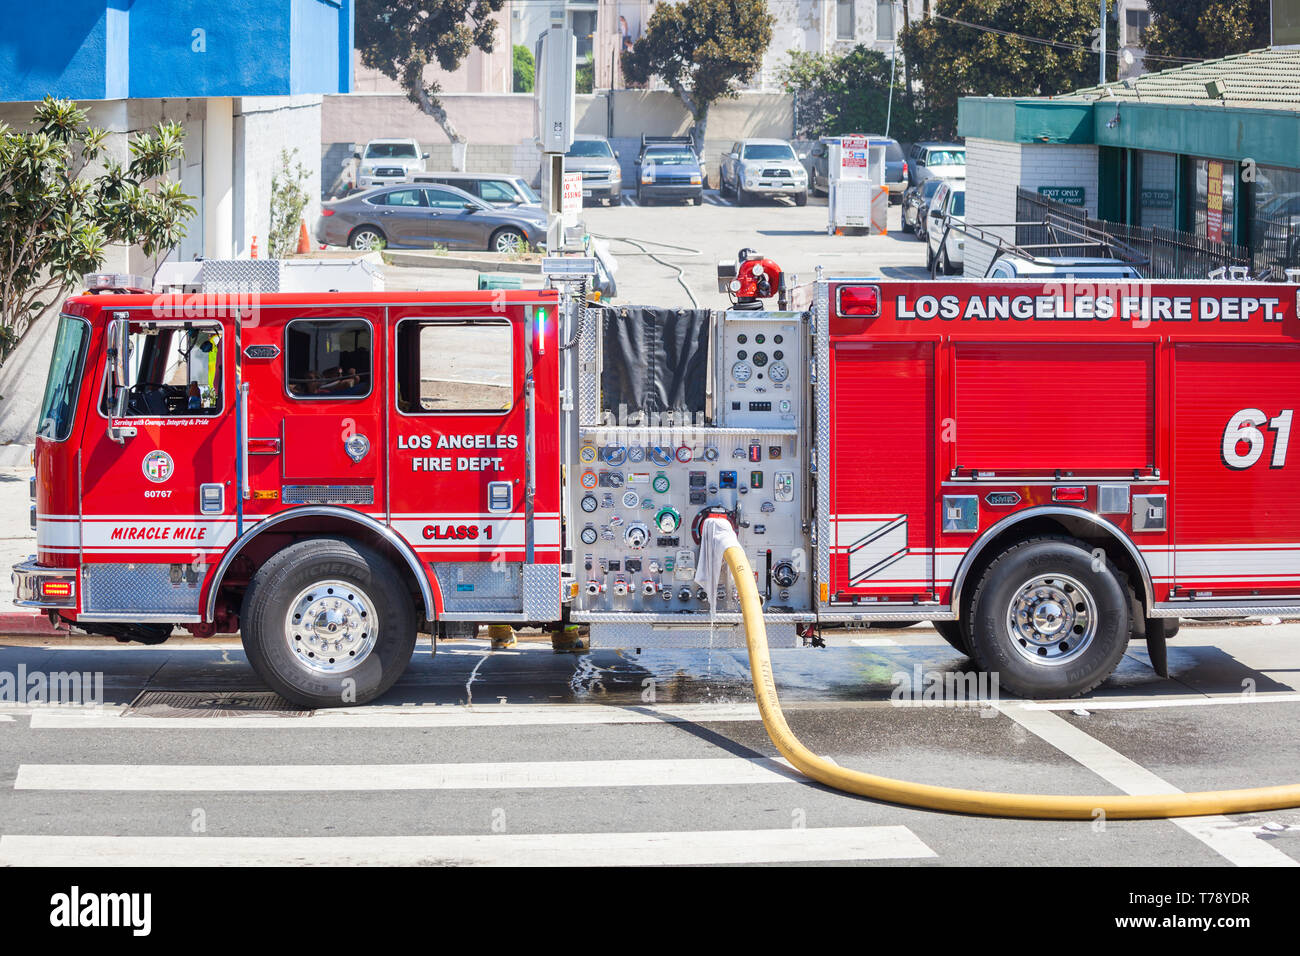 Los Angeles, Kalifornien - May 29, 2017: Los Angeles fire truck in Gebrauch Stockfoto